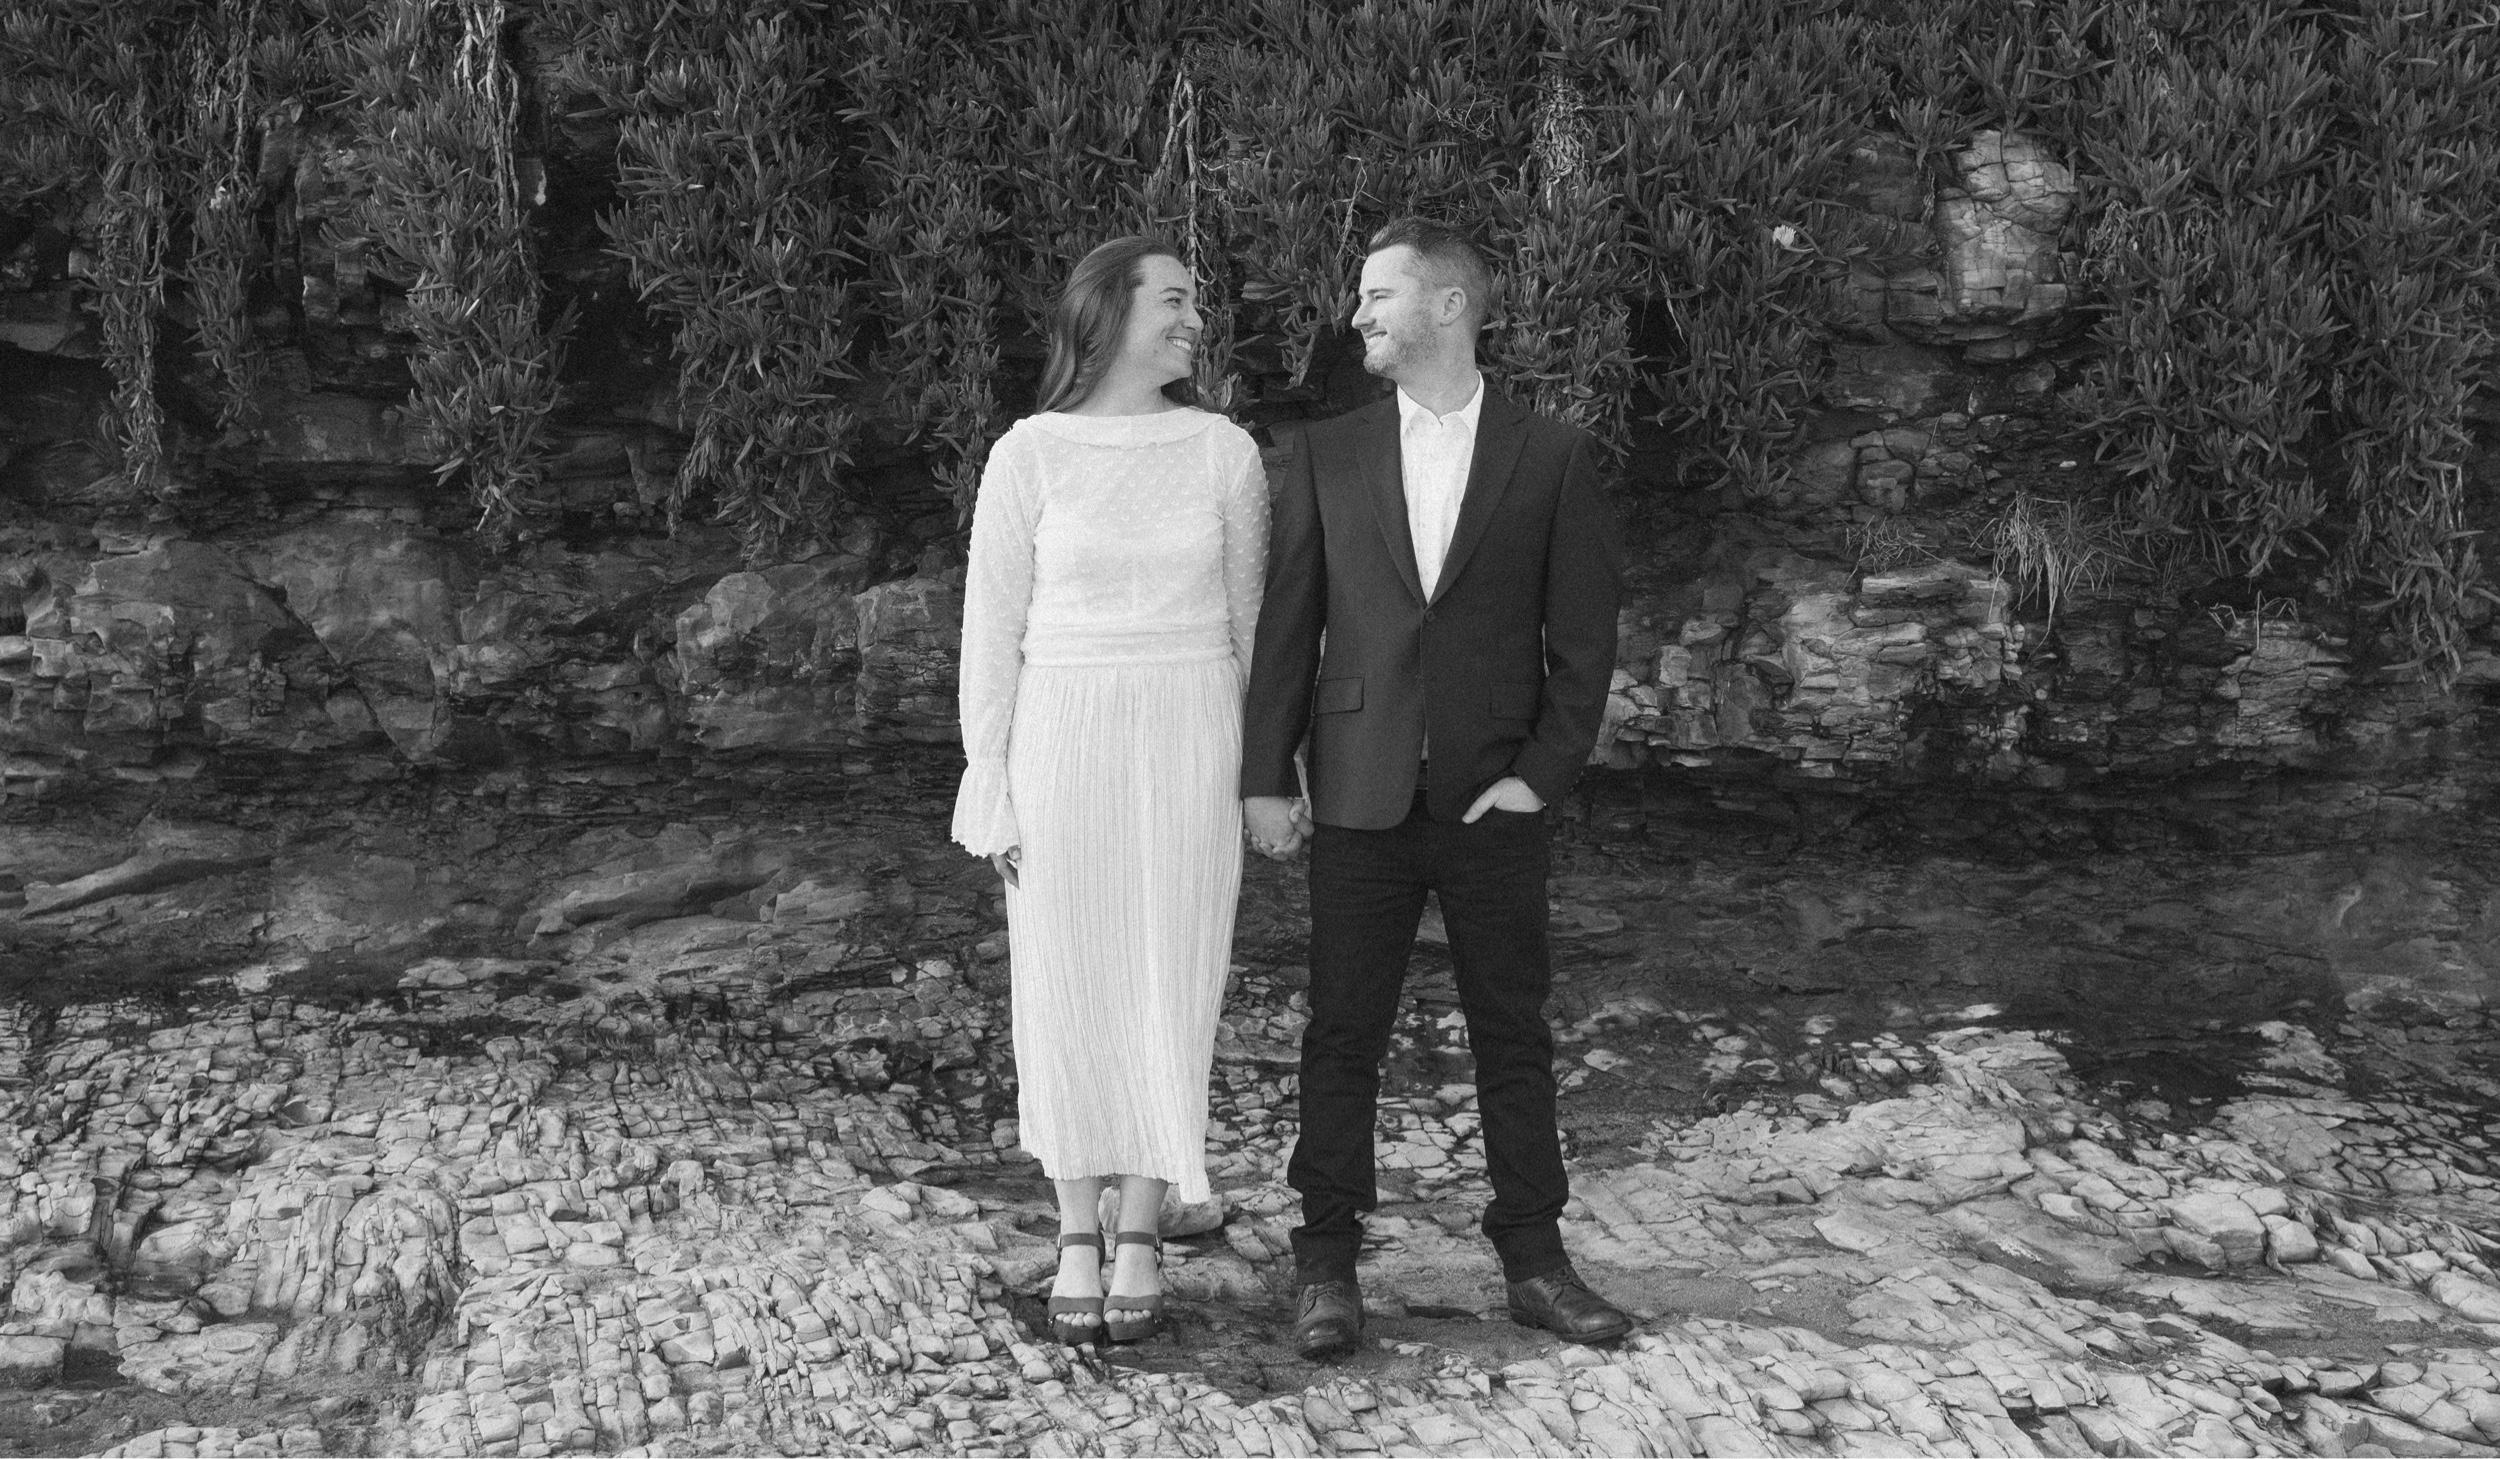 The Wedding Website of Margo Sargent and Ethan McCallum